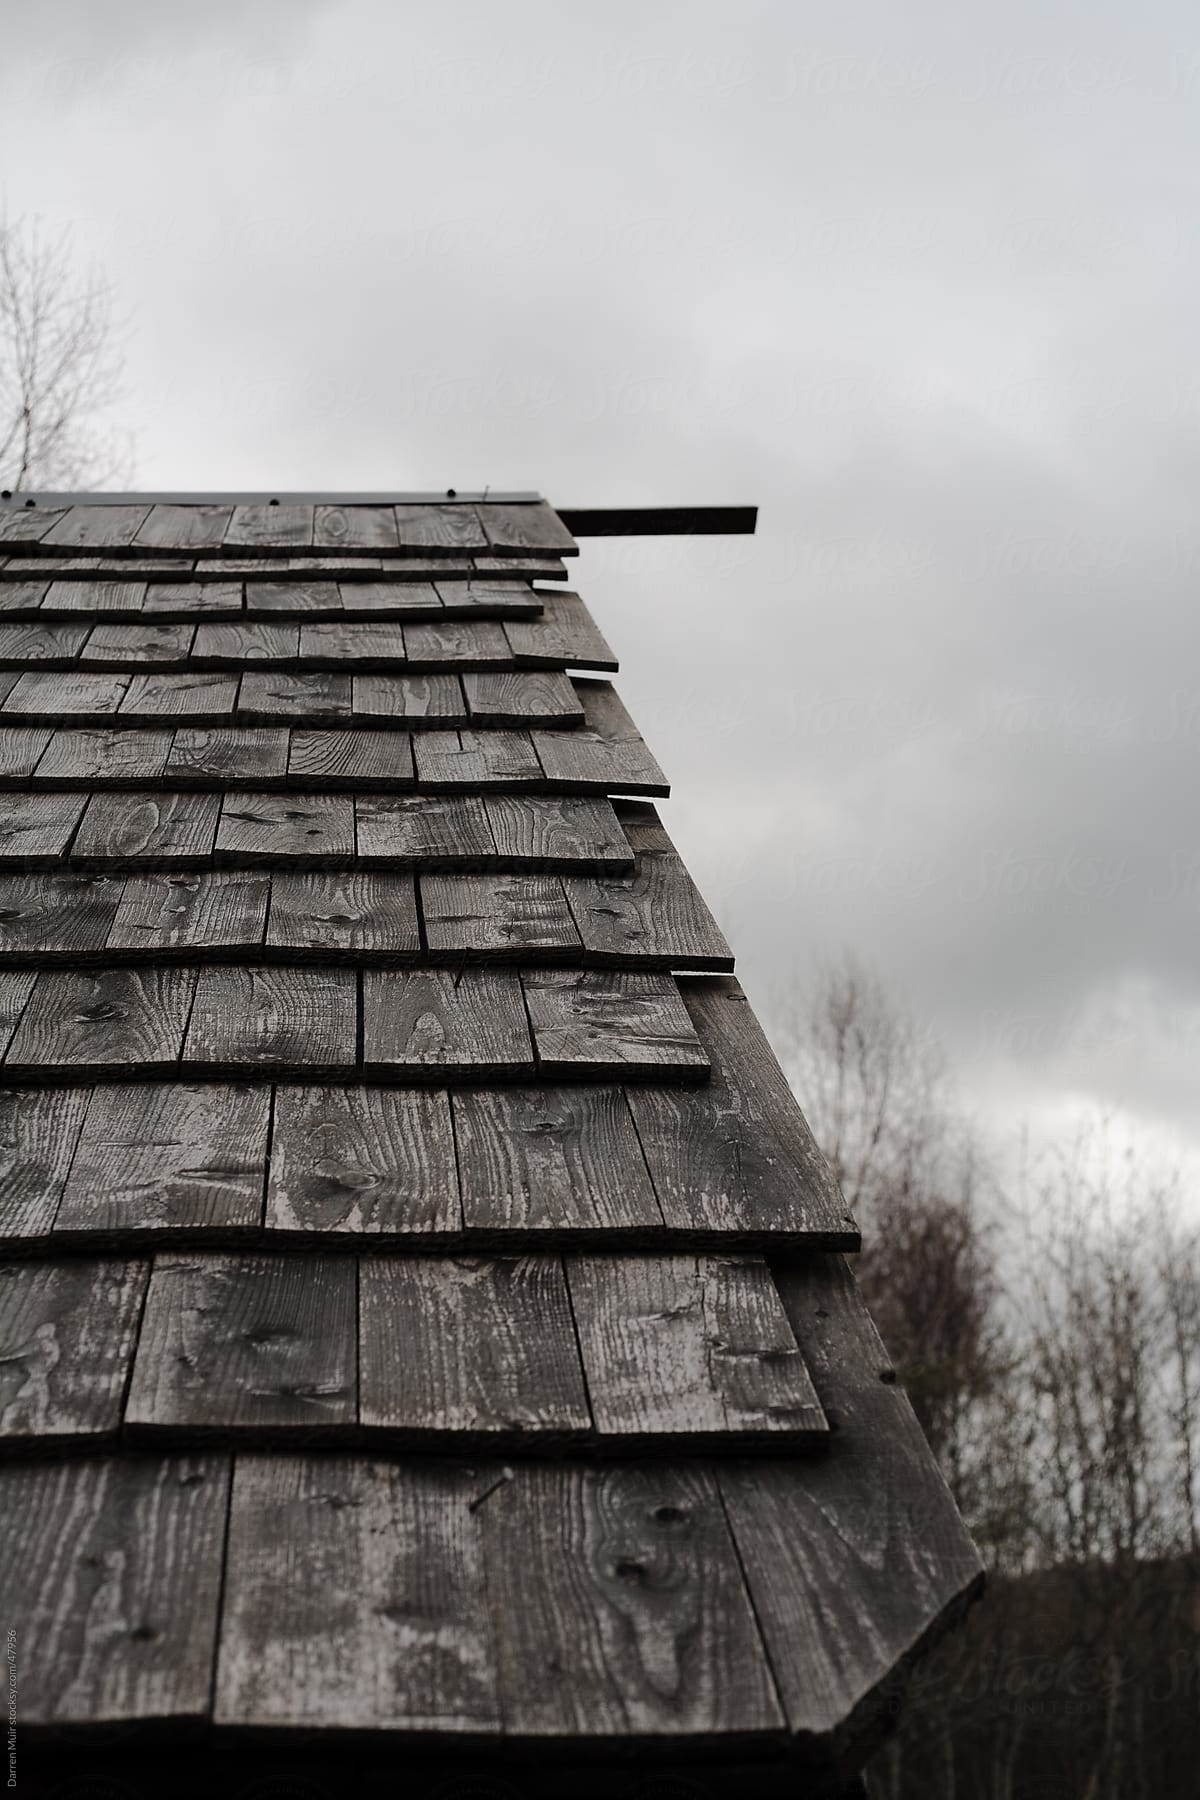 Wood Tiles on roof.